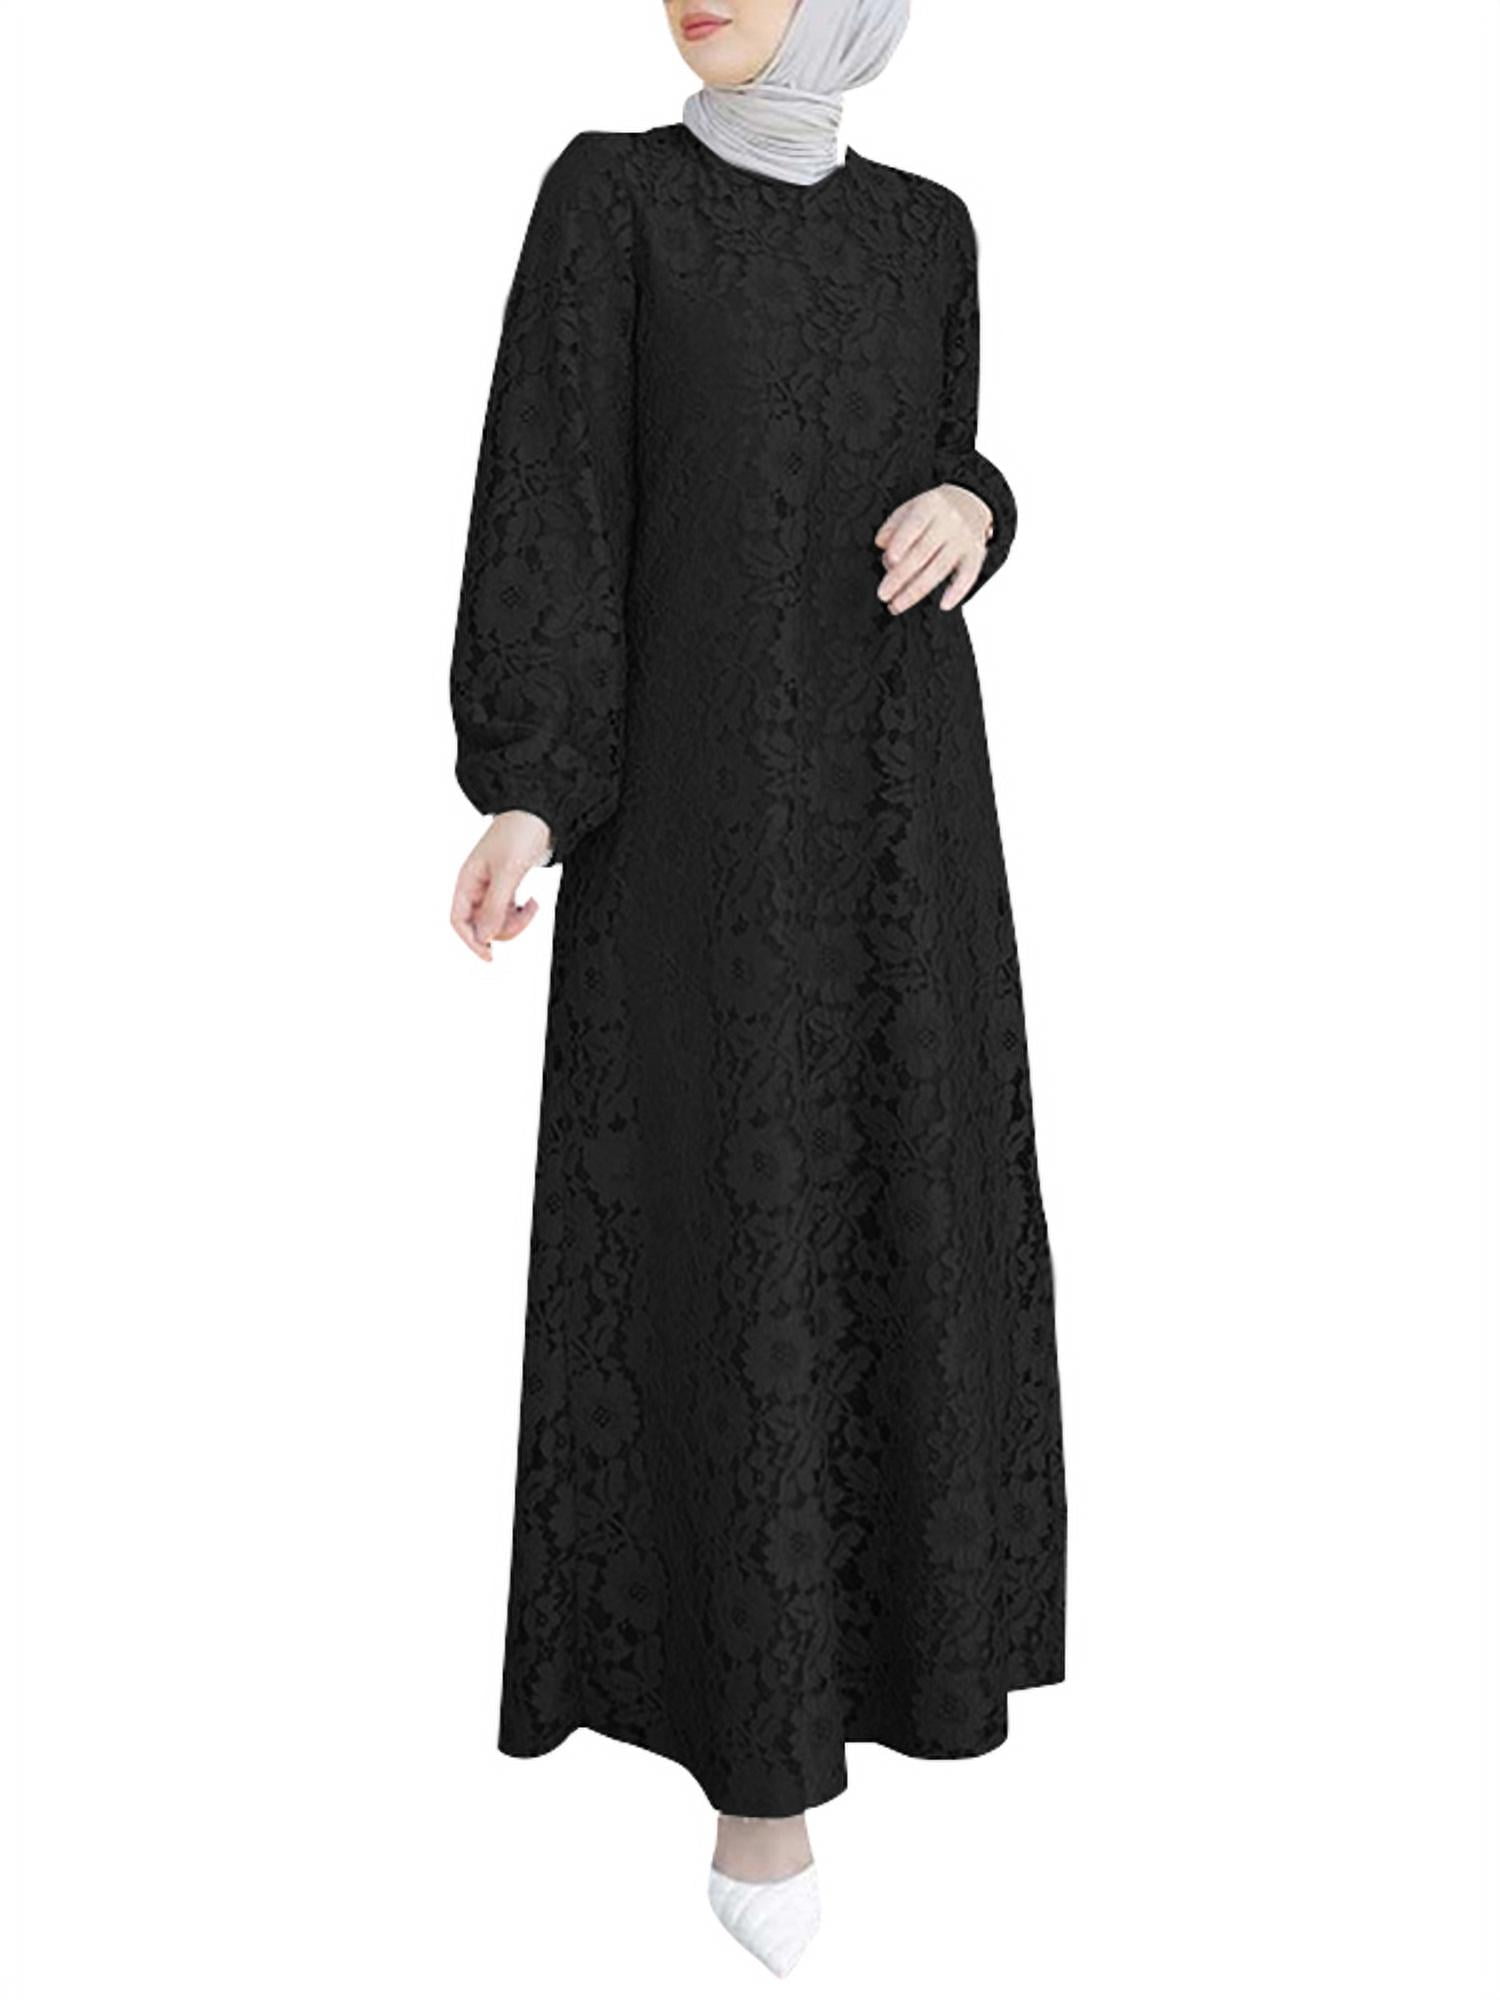 ZANZEA Women Muslim Long Abaya Lace Patchwork Elastic Cuff Maxi Dress ...